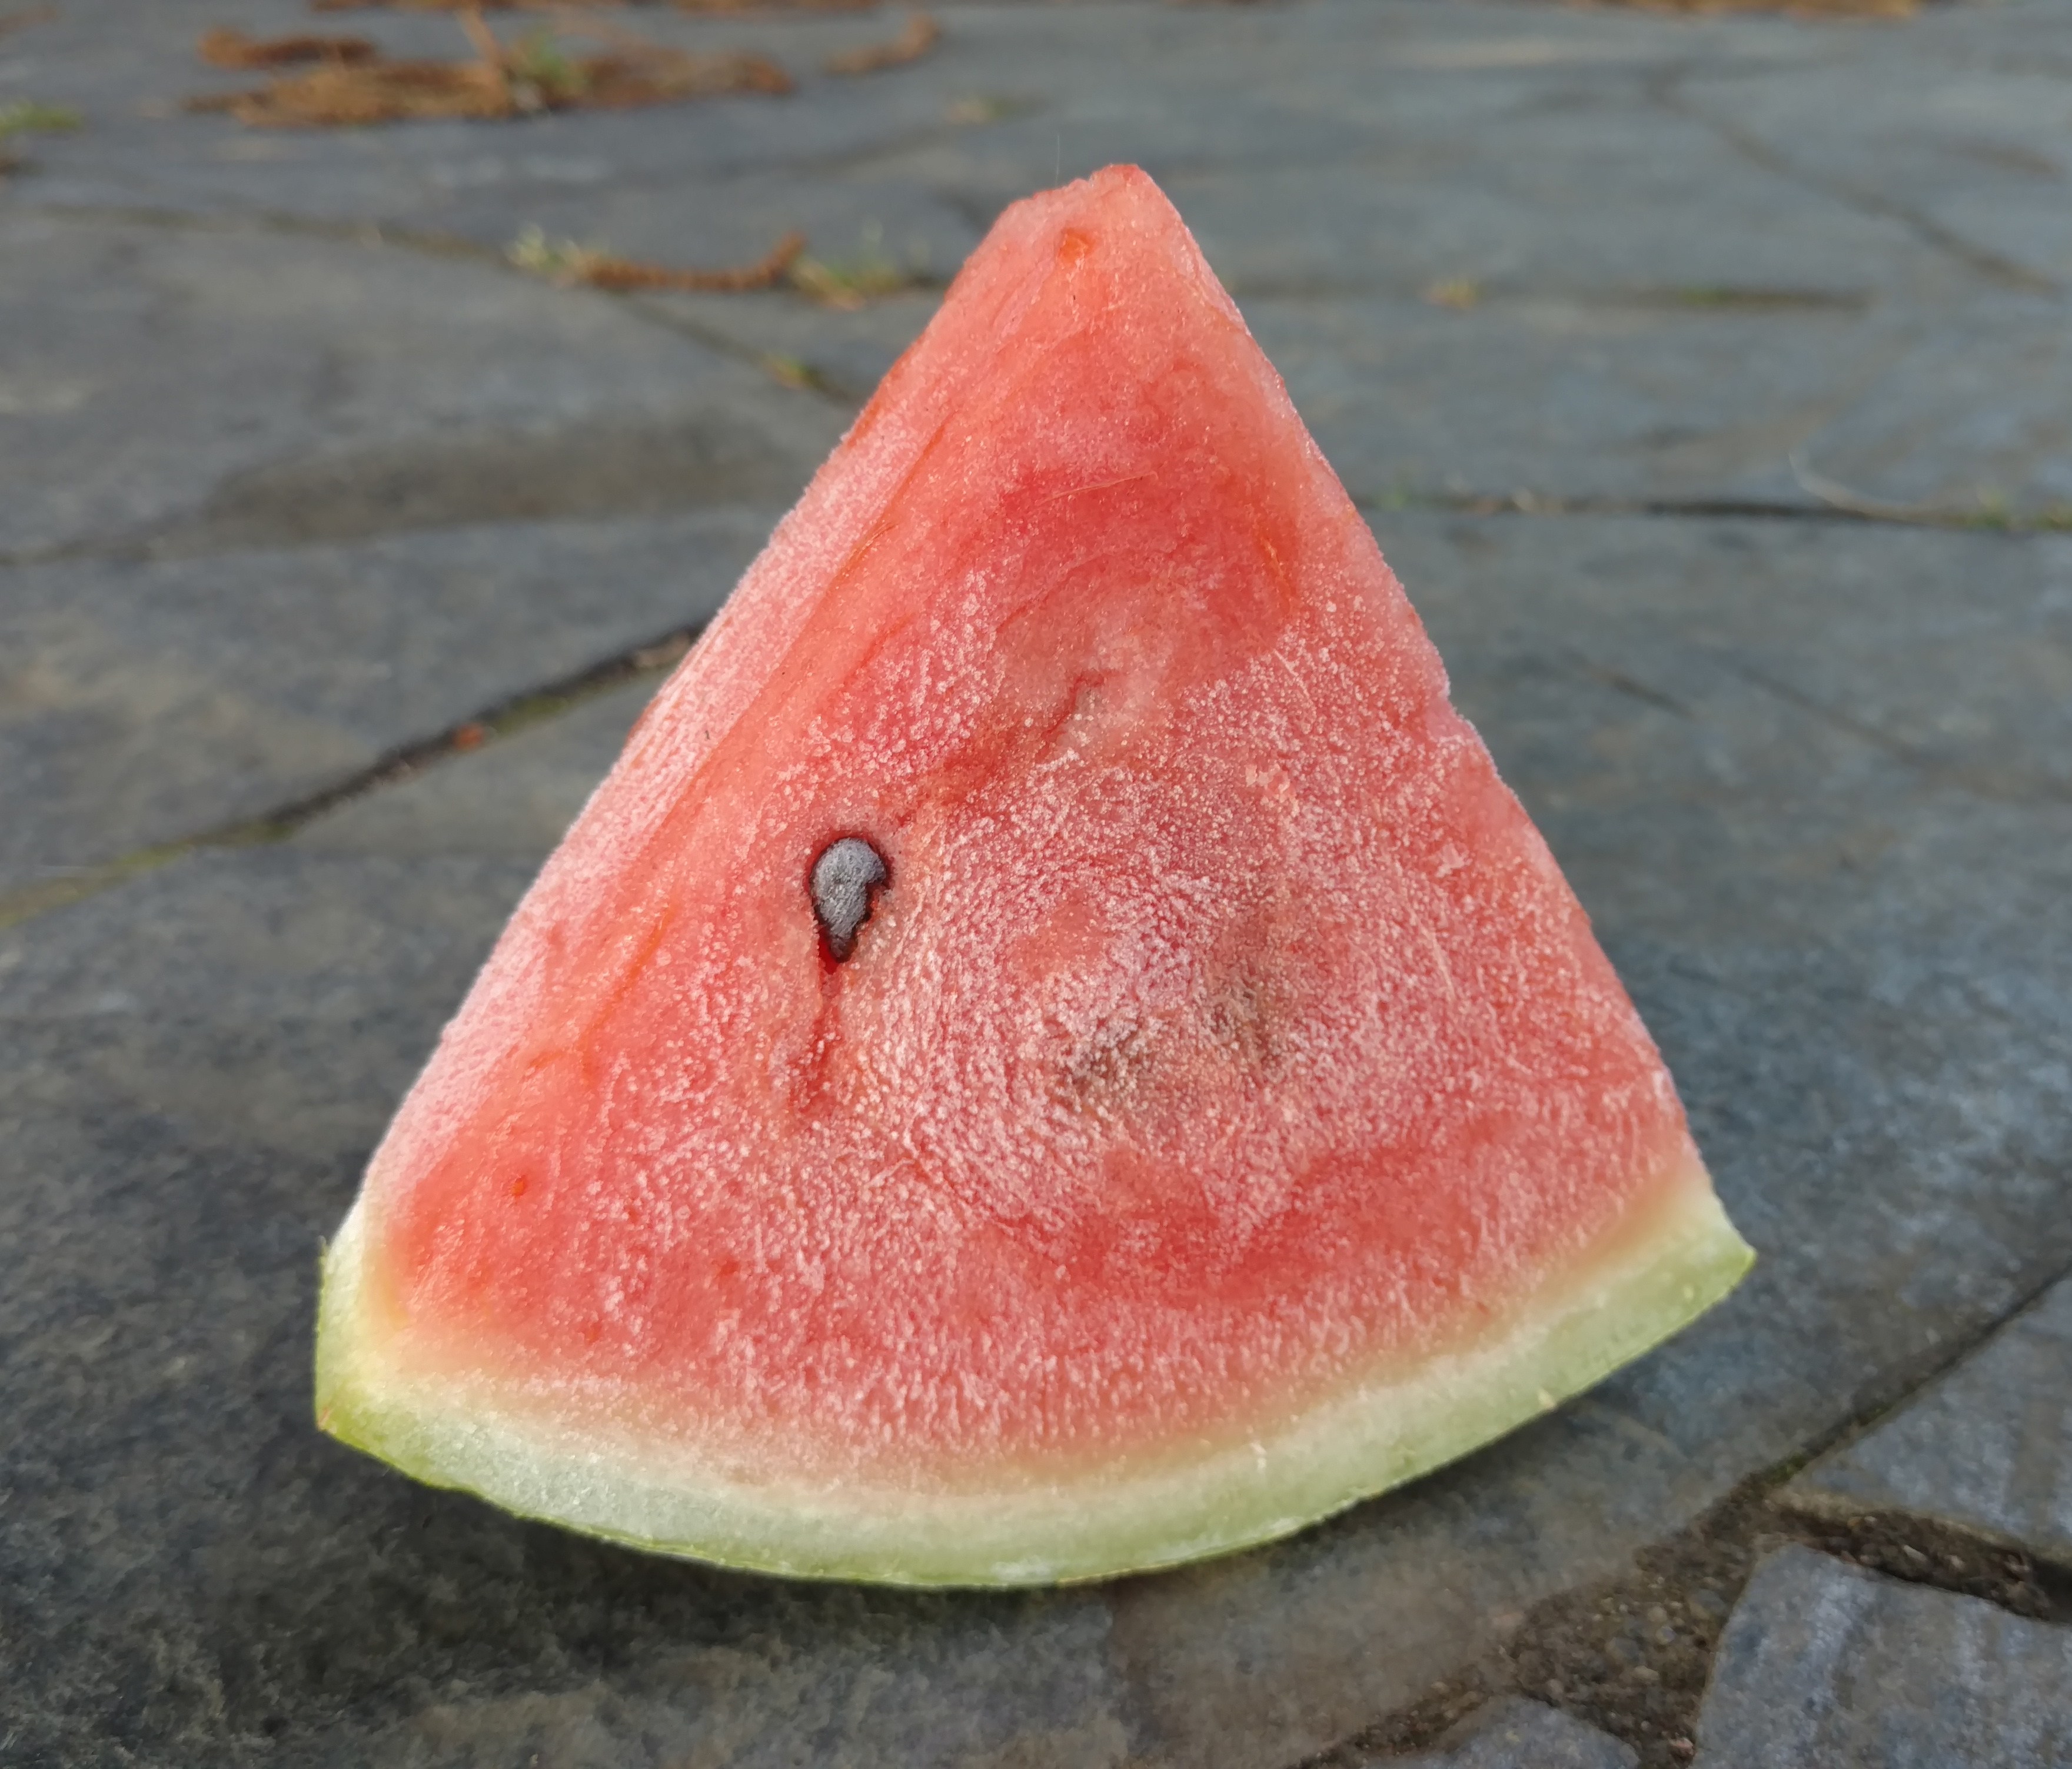 1 Ingredient Watermelon Popsicles (Paleo, Vegan & Sugar-free) - Eat ...